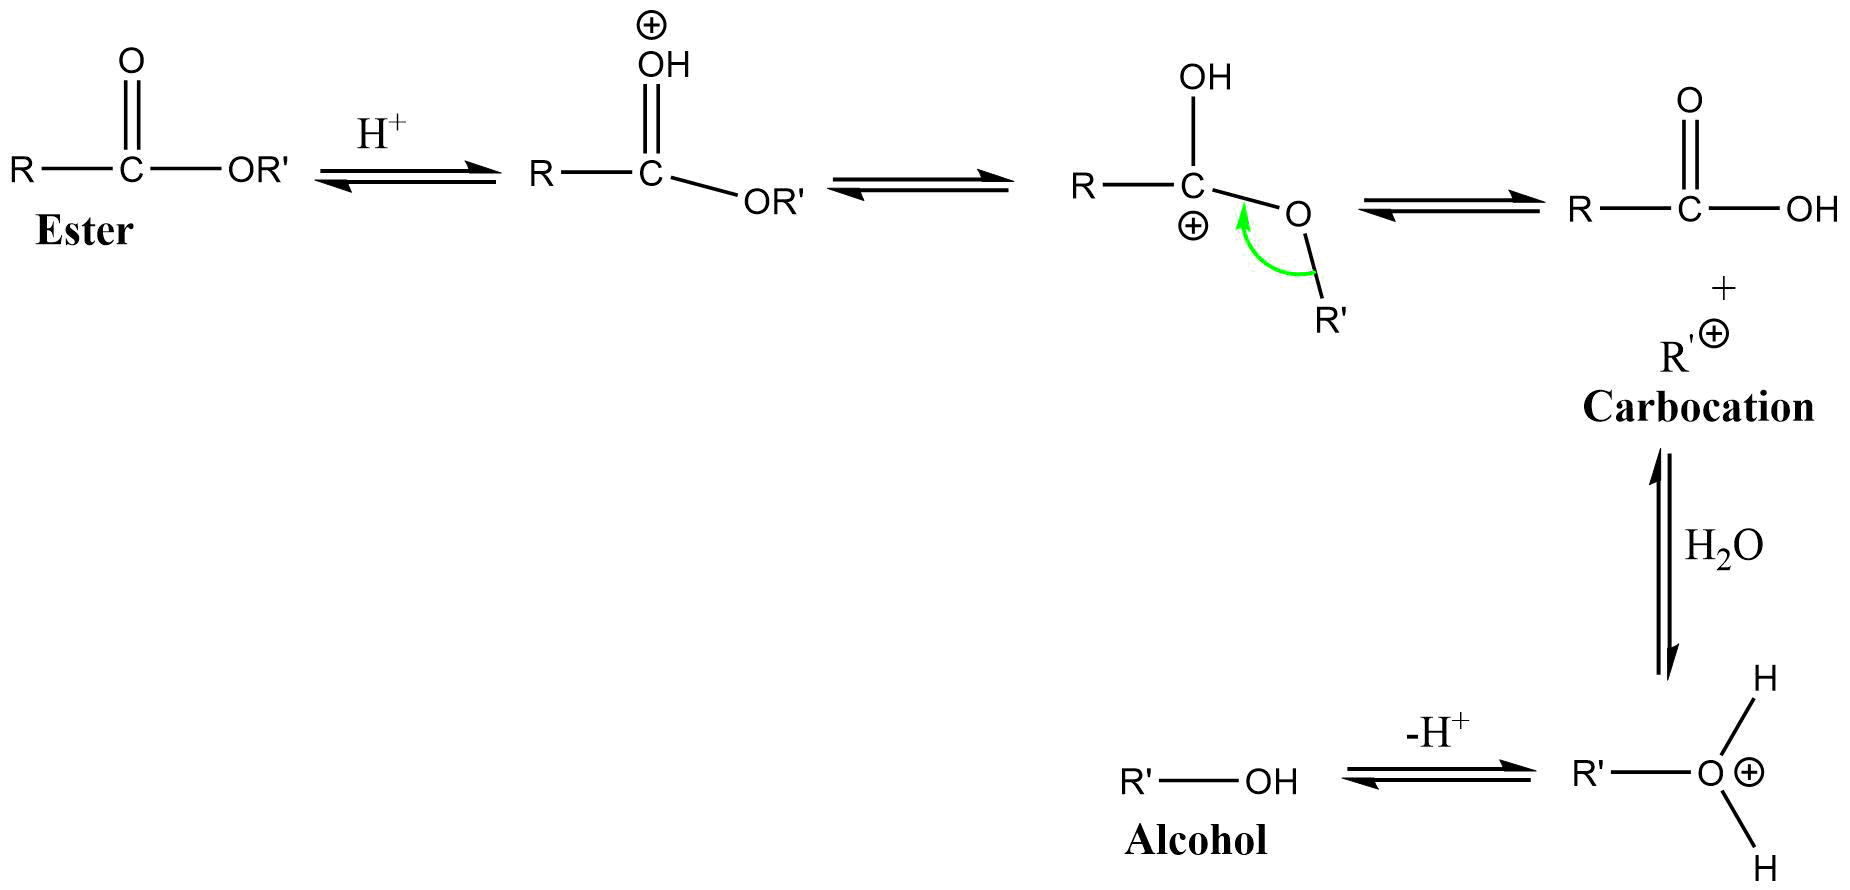 AAL1 (Acid catalyzed alkyl-oxygen bond cleavage unimolecular reaction)